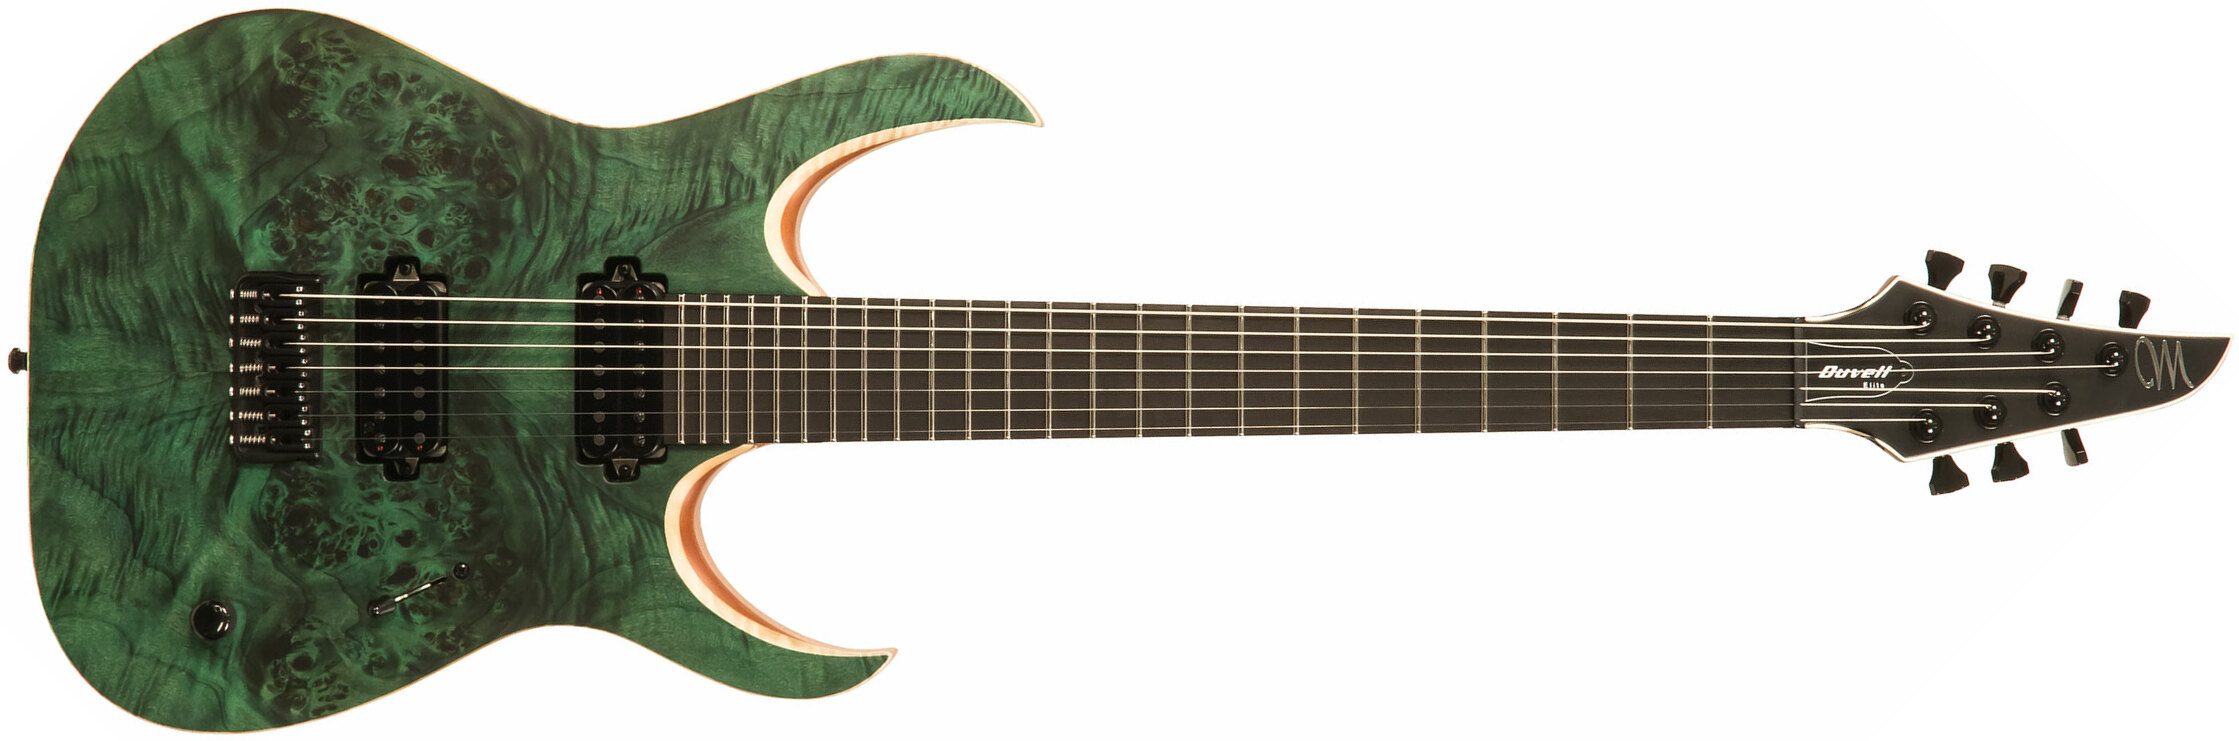 Mayones Guitars Duvell Elite 7 Hh Tko Ht Eb - Dirty Green Satin - Guitarra eléctrica de 7 cuerdas - Main picture